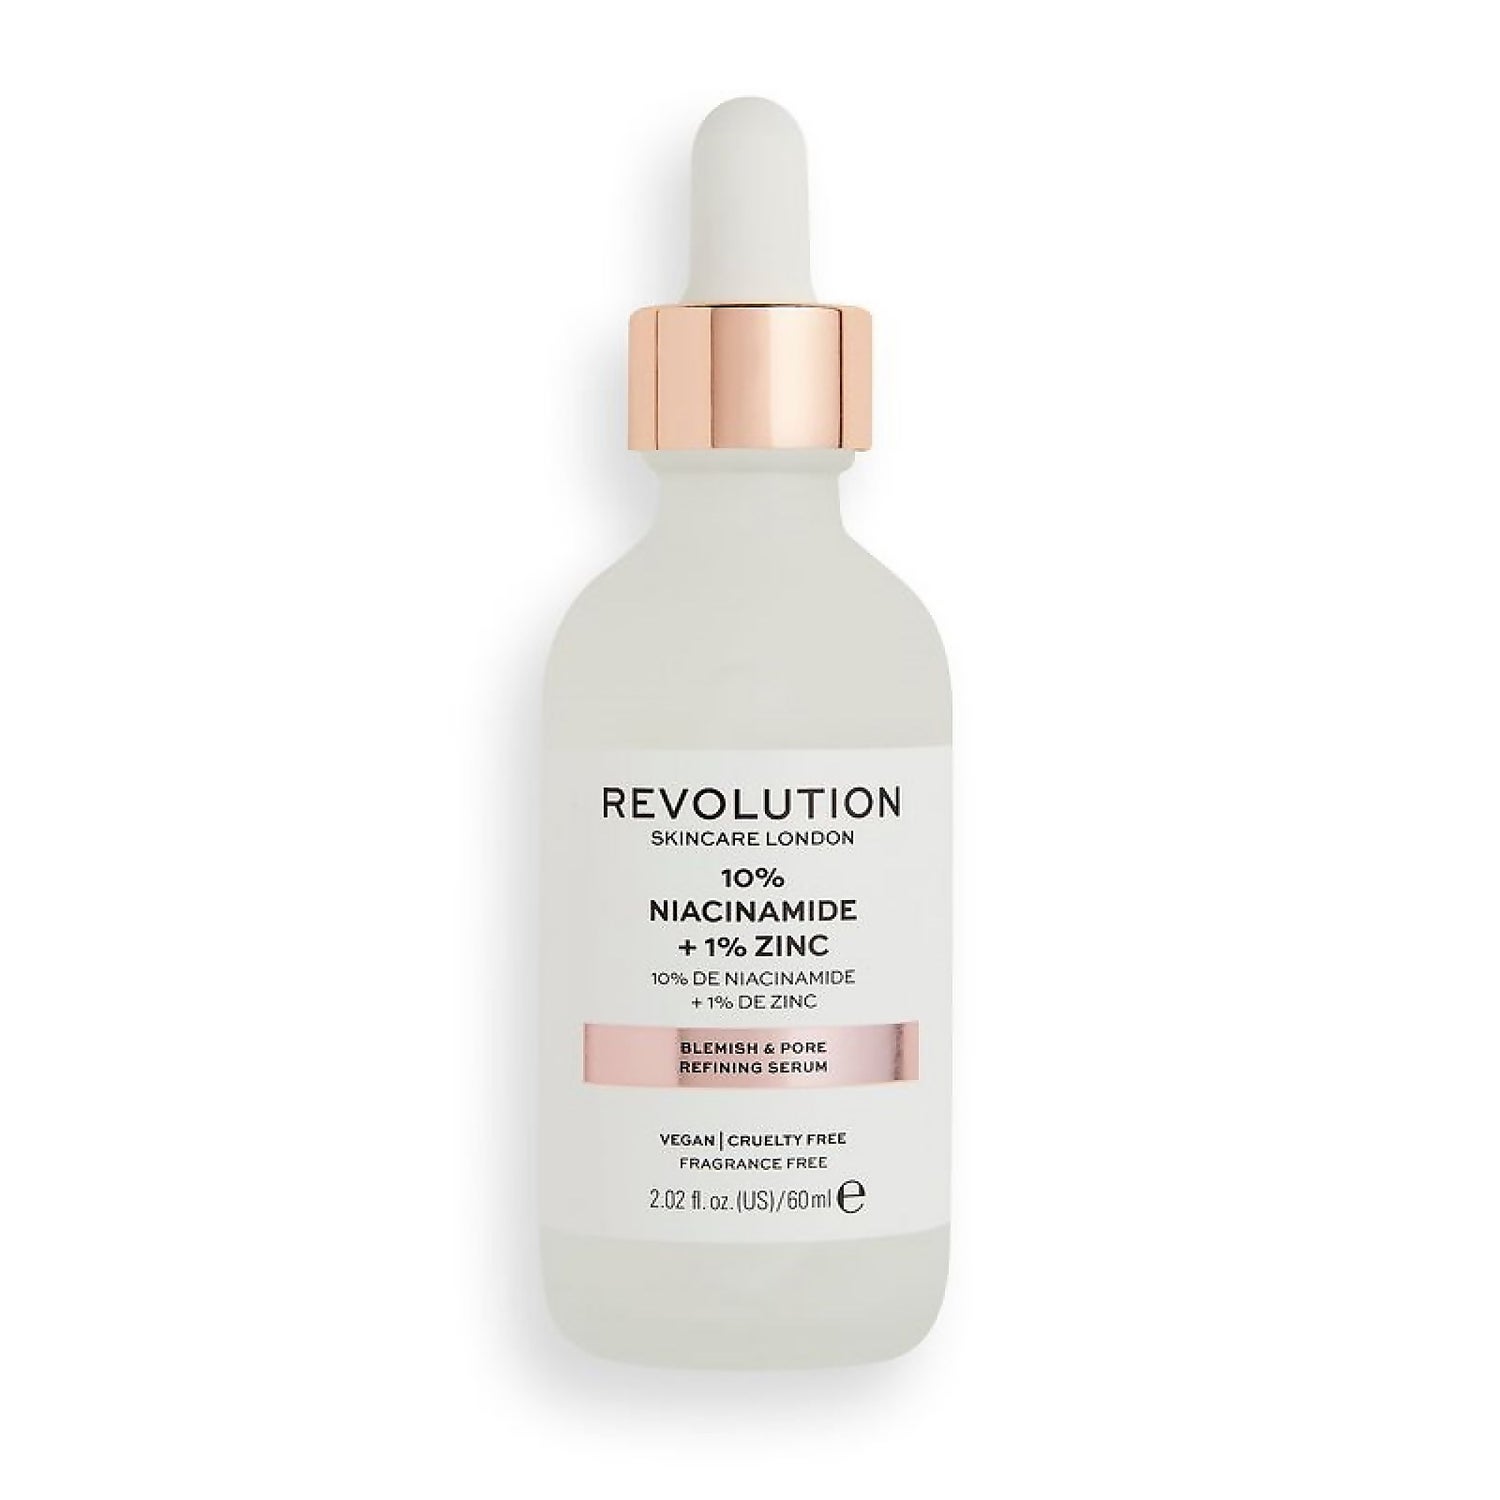 Revolution Skincare 10% Niacinamide + 1% Zinc Blemish & Pore Refining Serum Supersized